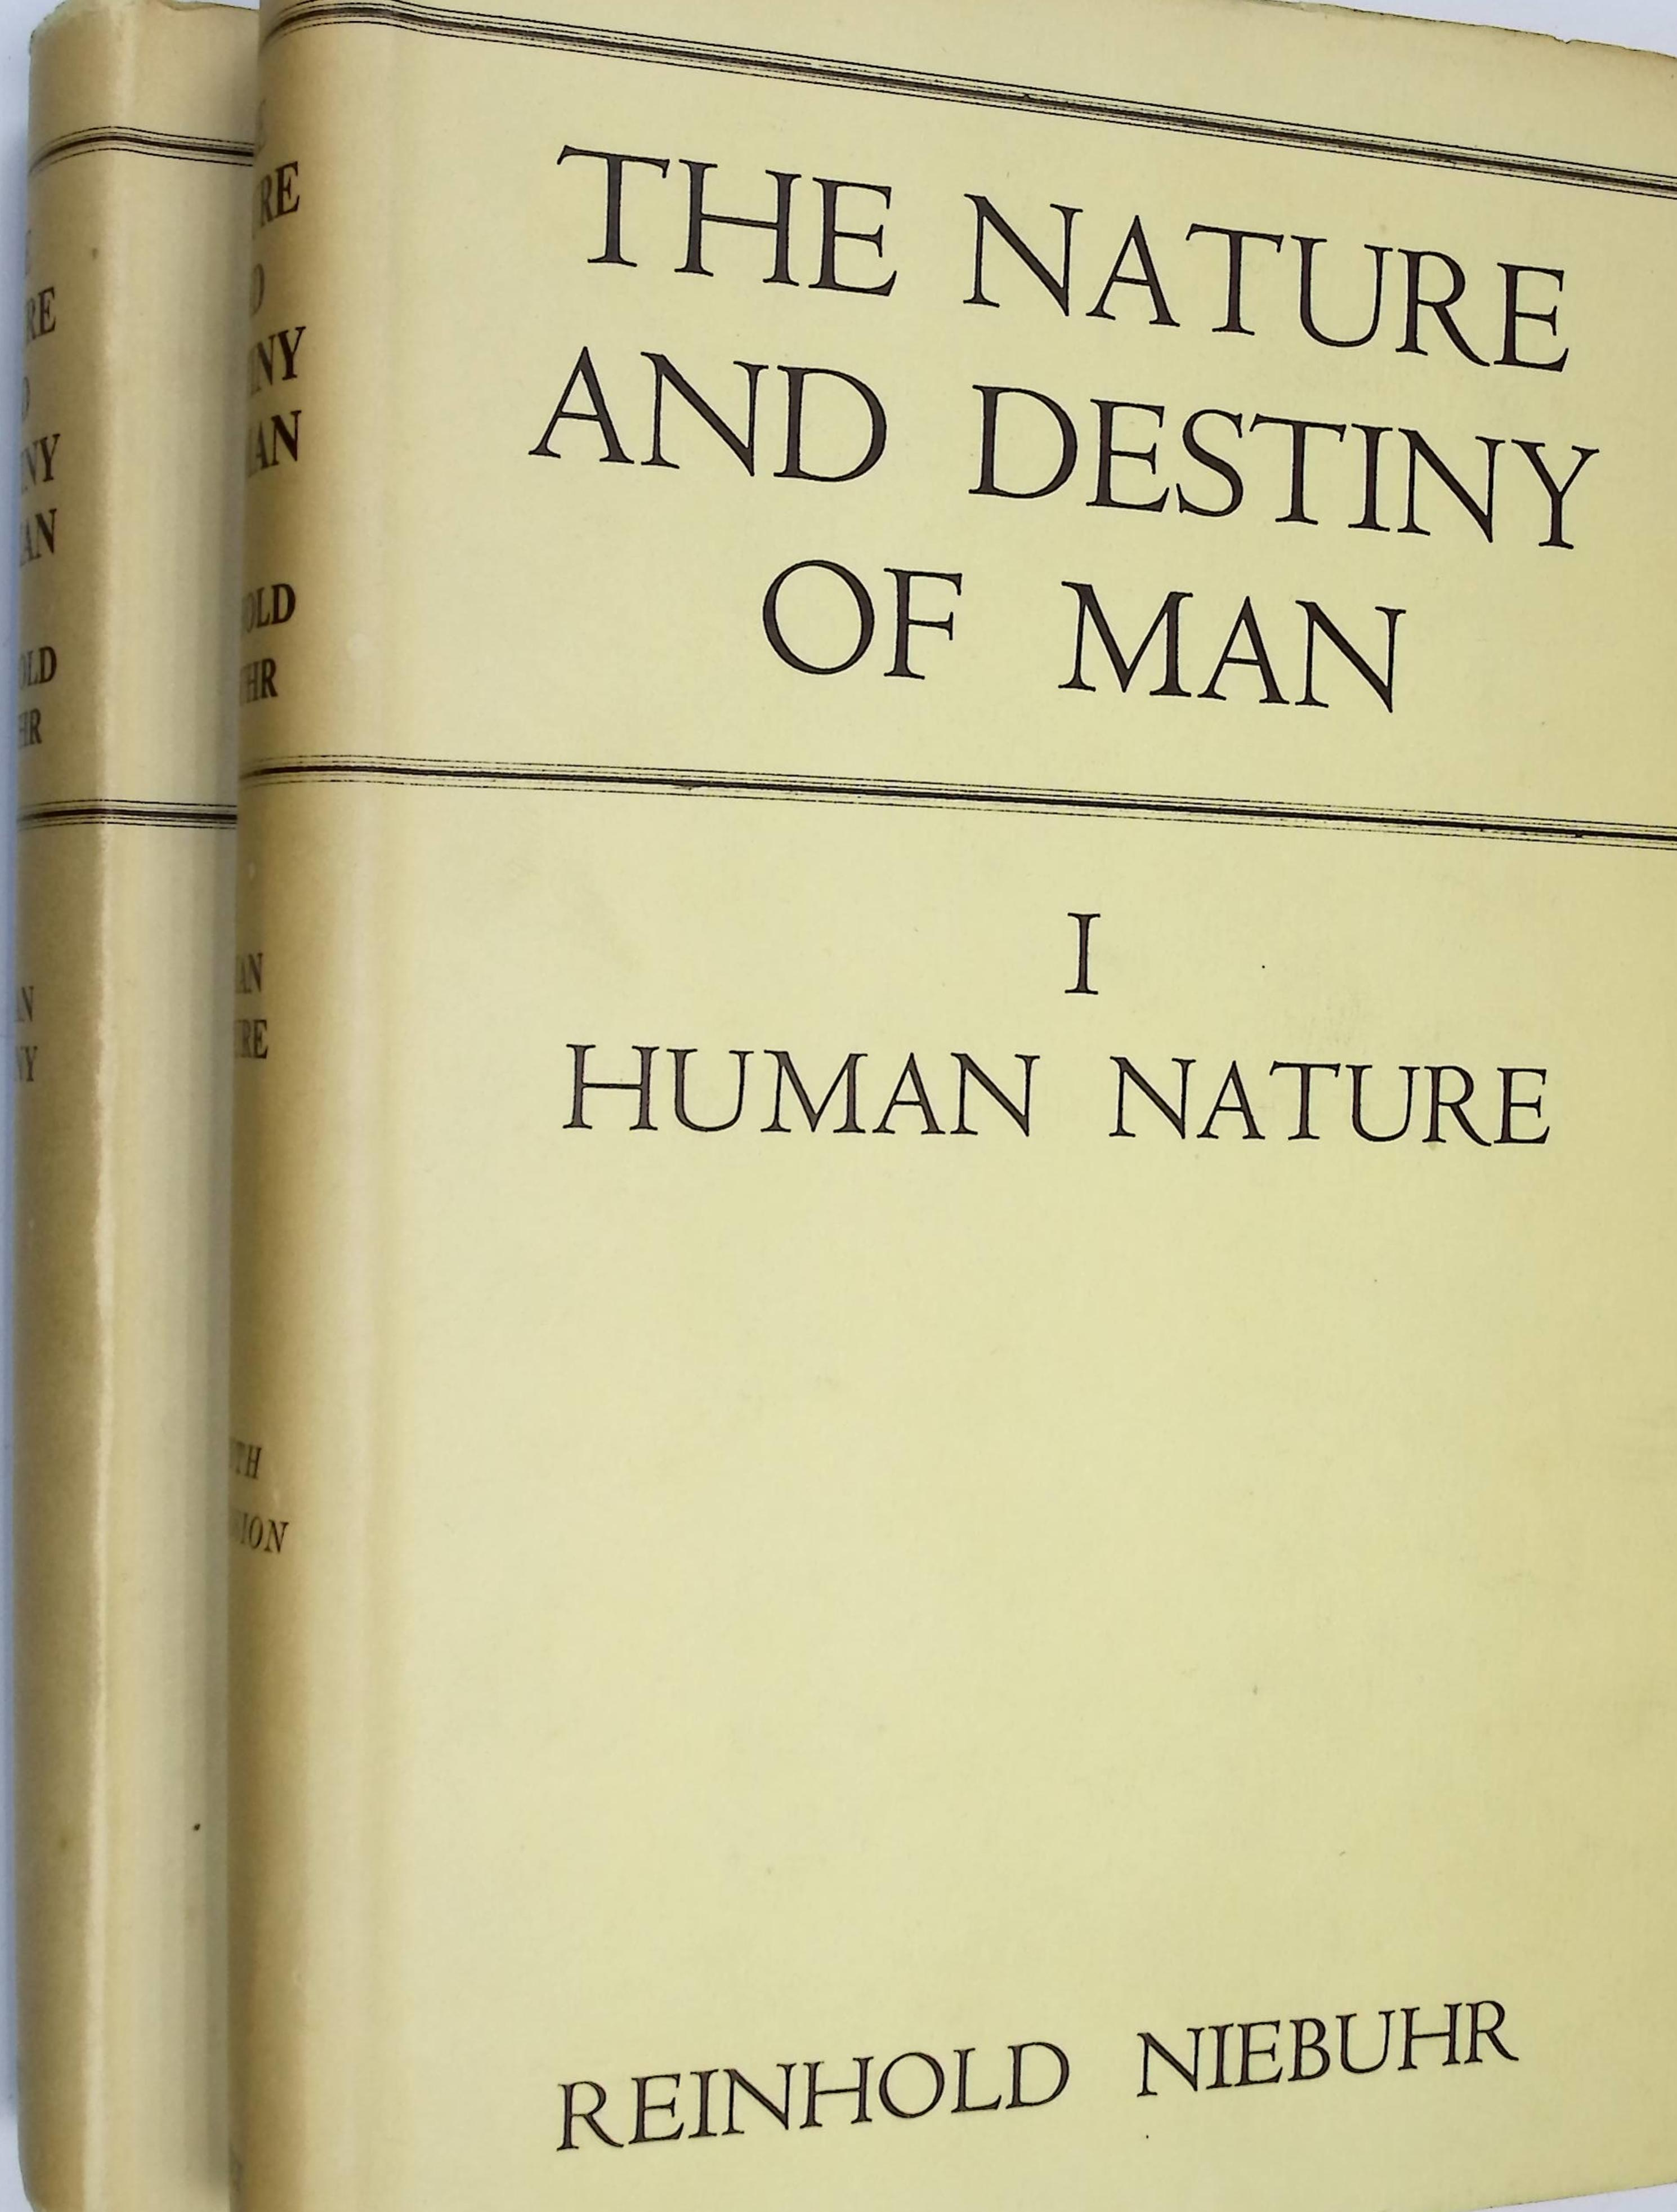 The Nature and Destiny of Man. A Christian Interpretation. Human Nature / Human Destiny. Two volume set